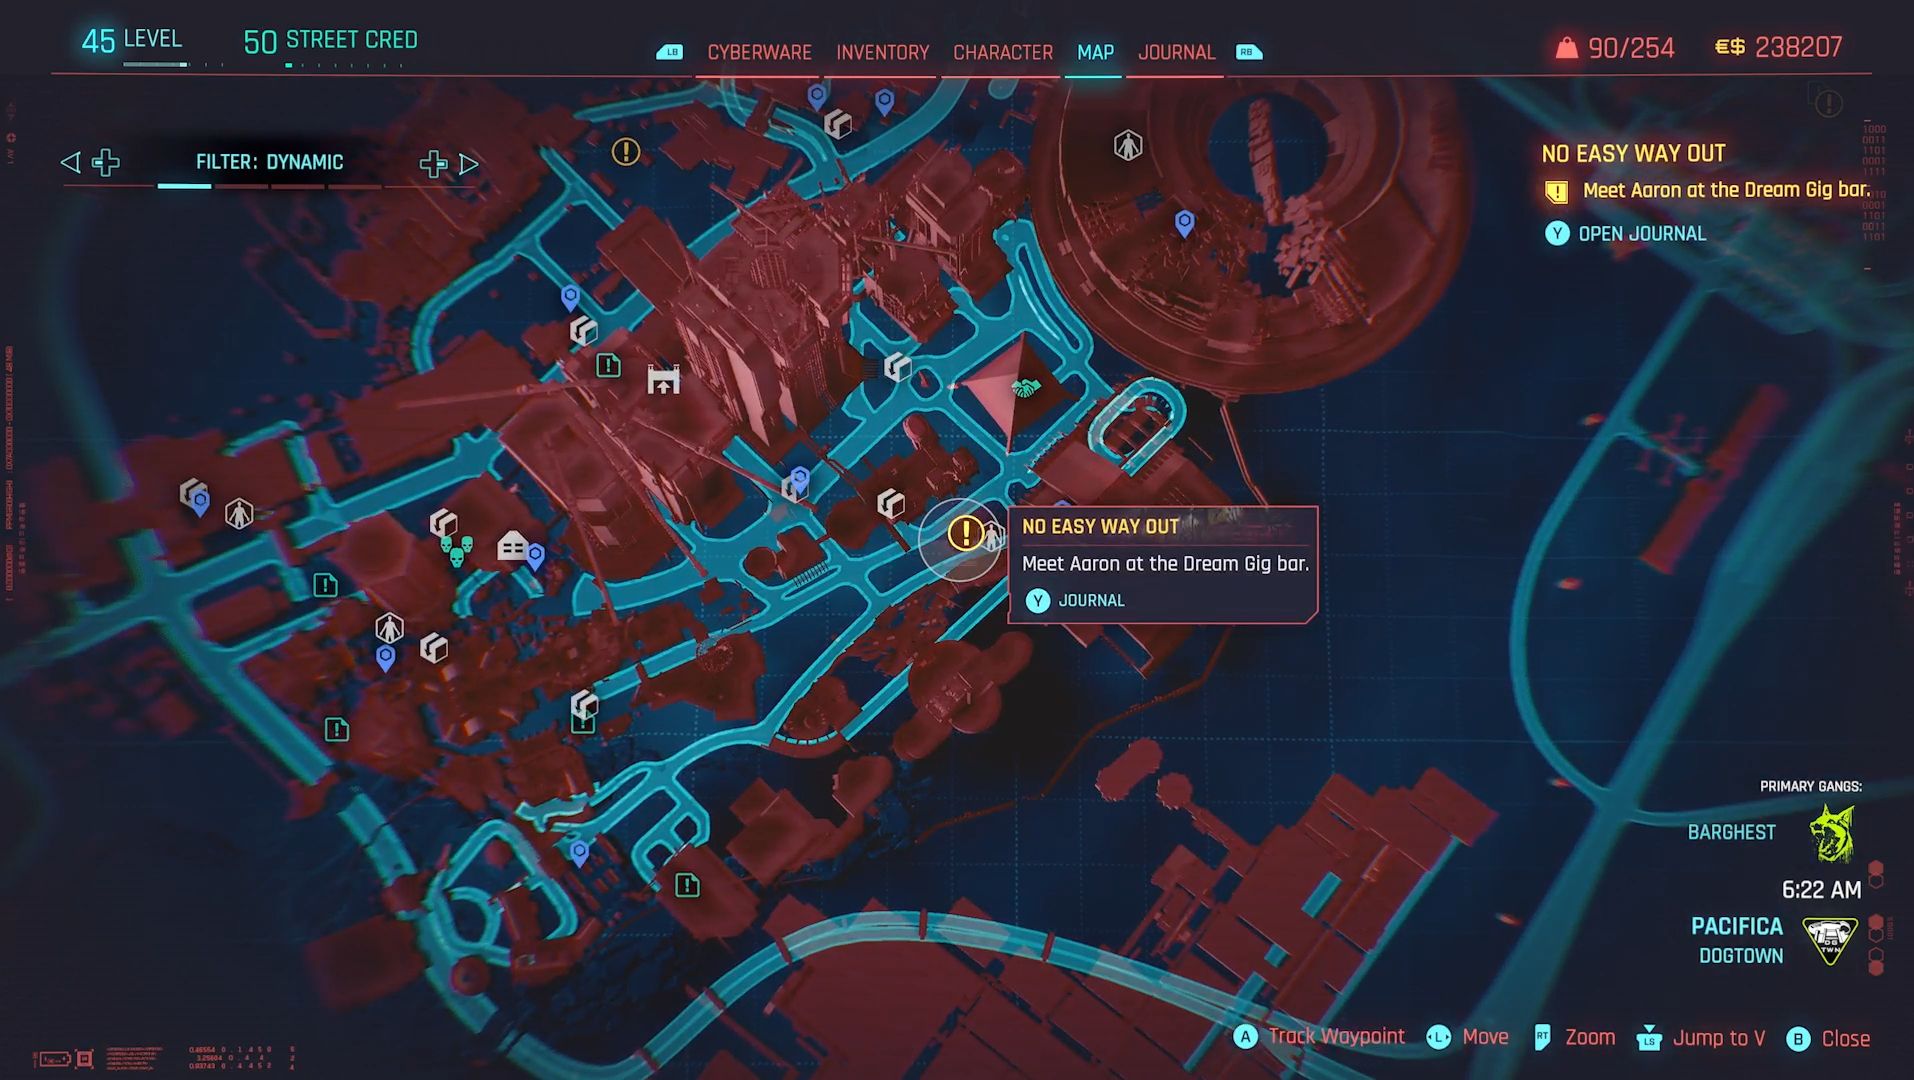 Cyberpunk 2077 Phantom Liberty Screenshot Showing The Dream Gig Bar Map Location